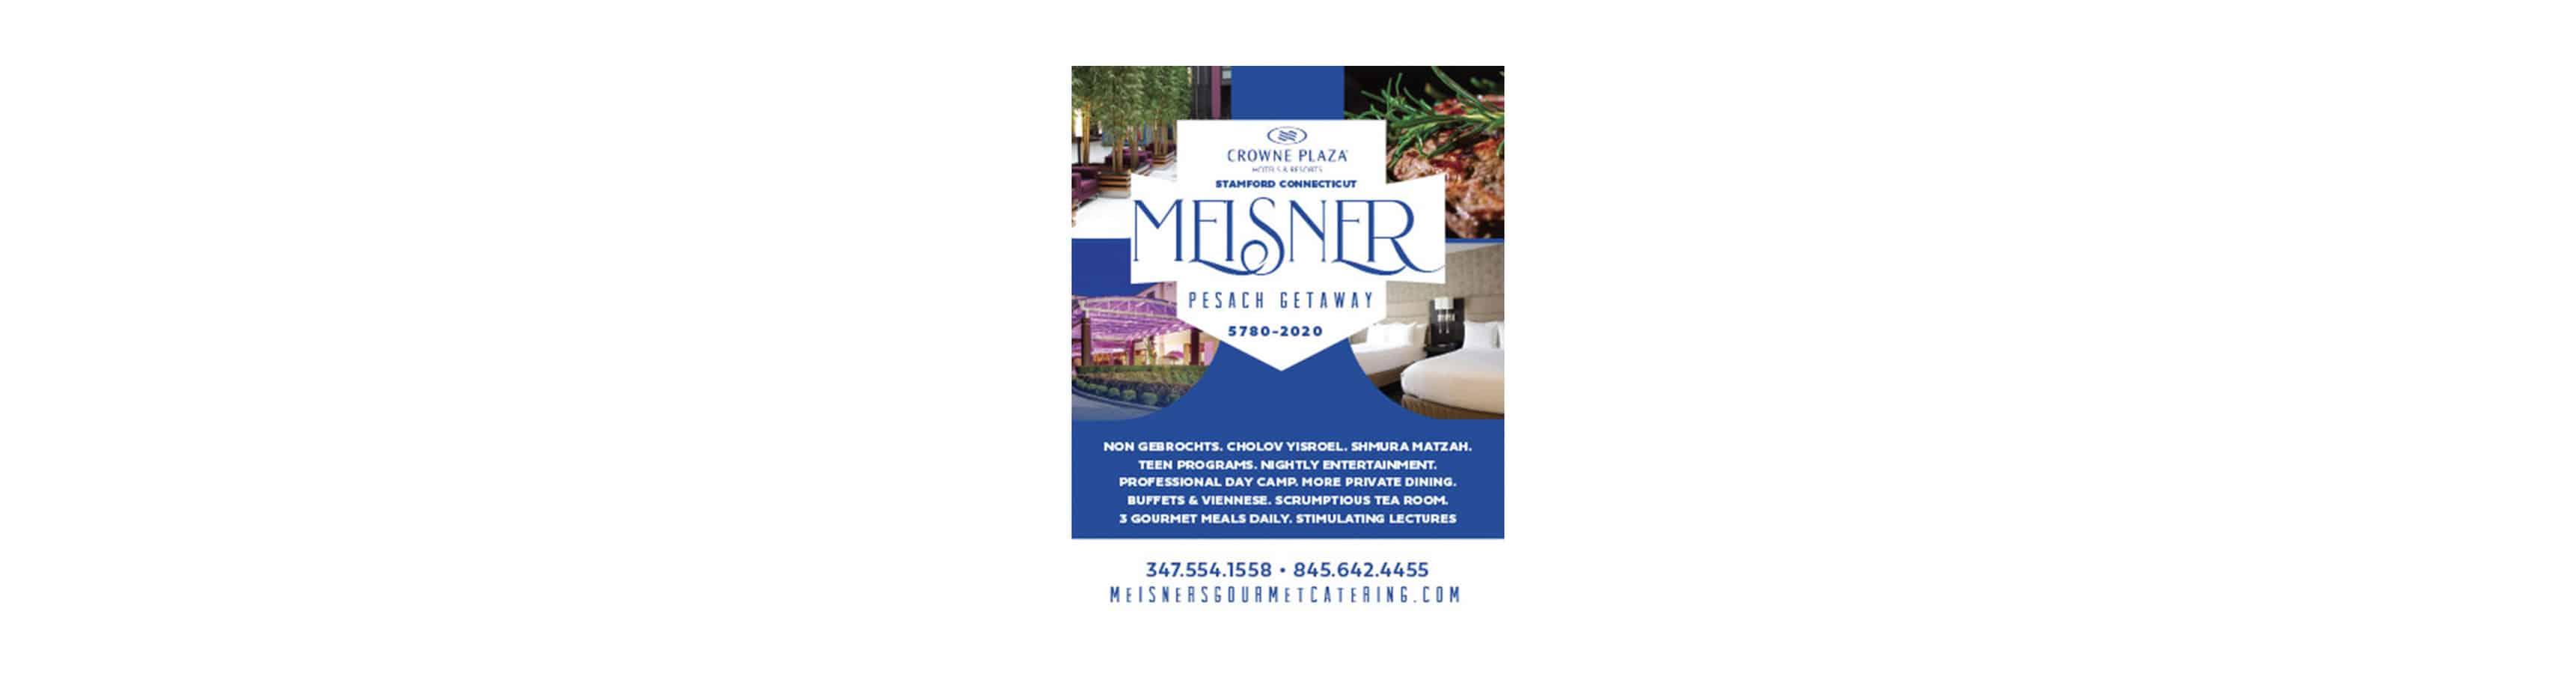 2020-meisners-gourmet-catering-passover-program-in-stamford